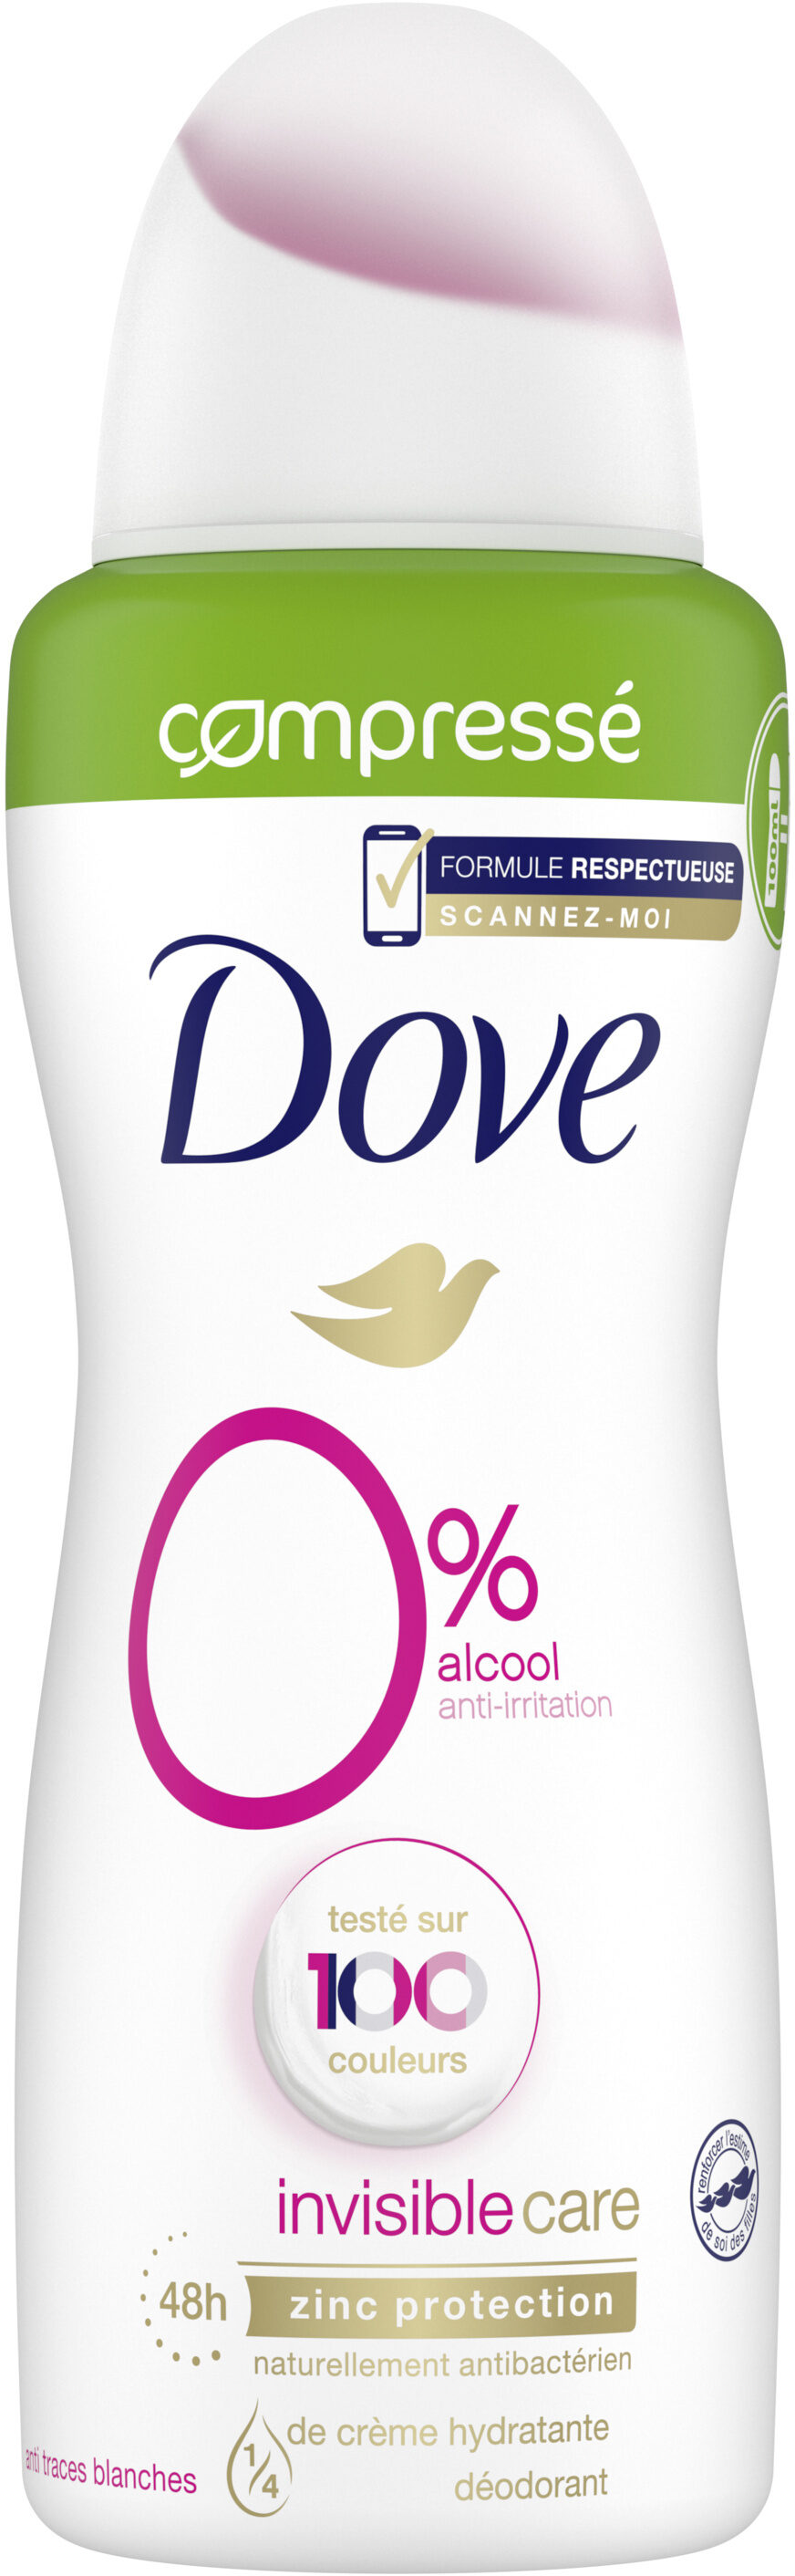 Dove Déodorant Spray Compressé Invisible Care 100ml - Product - fr